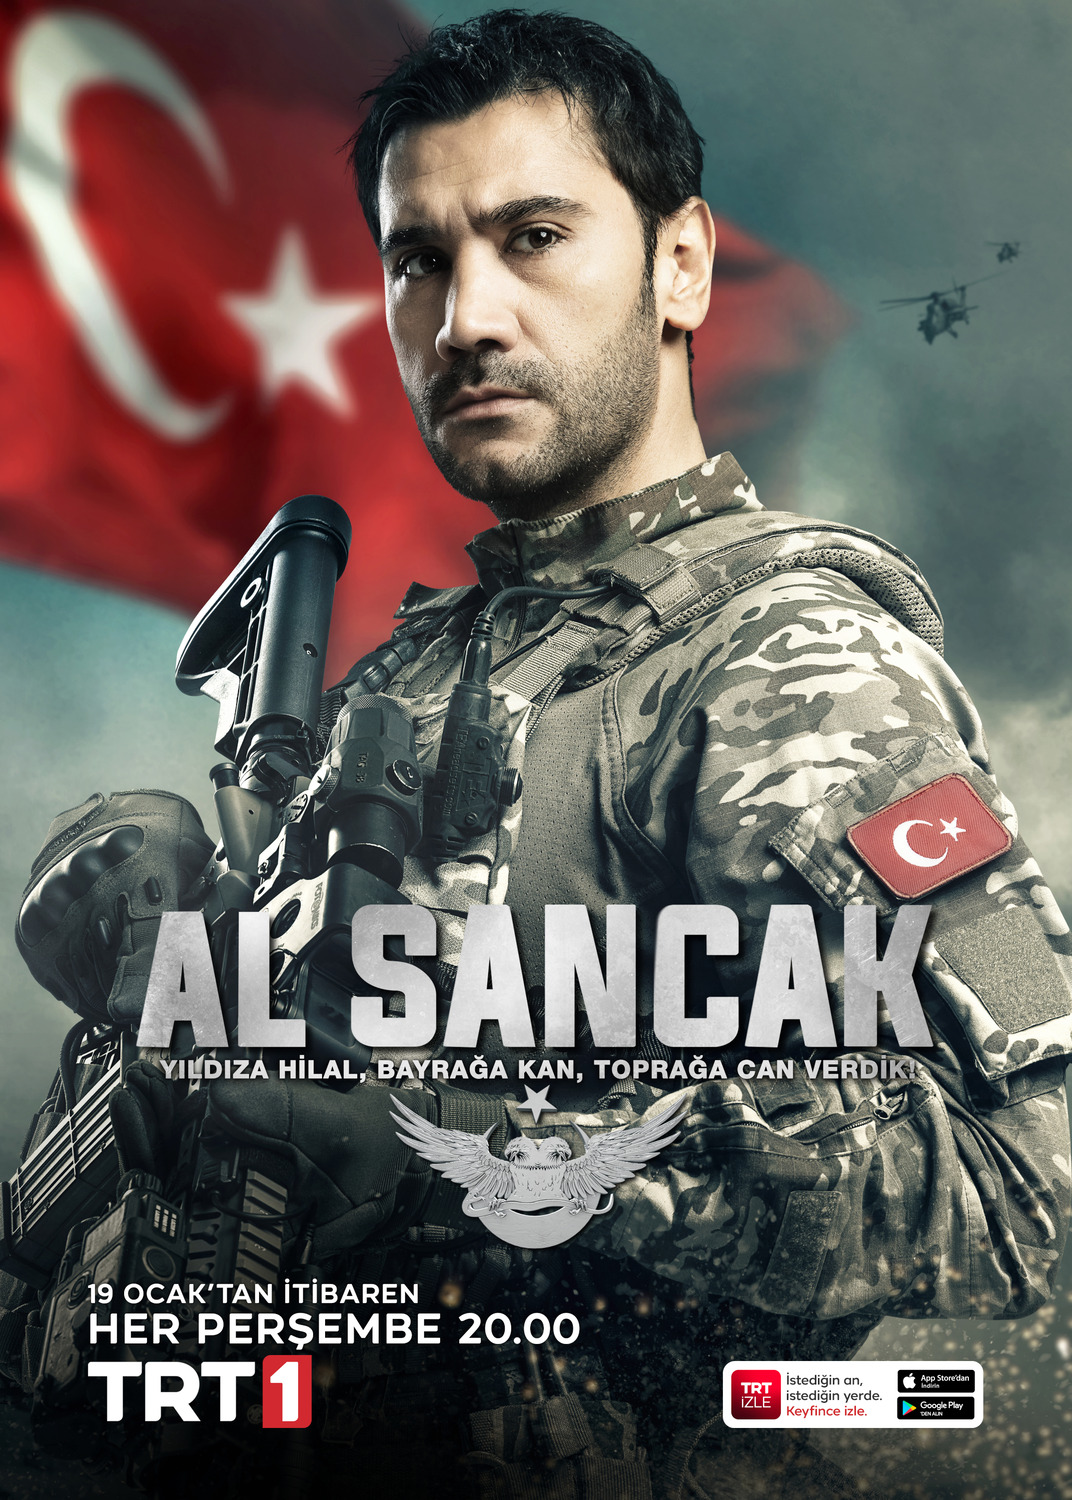 Extra Large TV Poster Image for Al Sancak (#1 of 20)